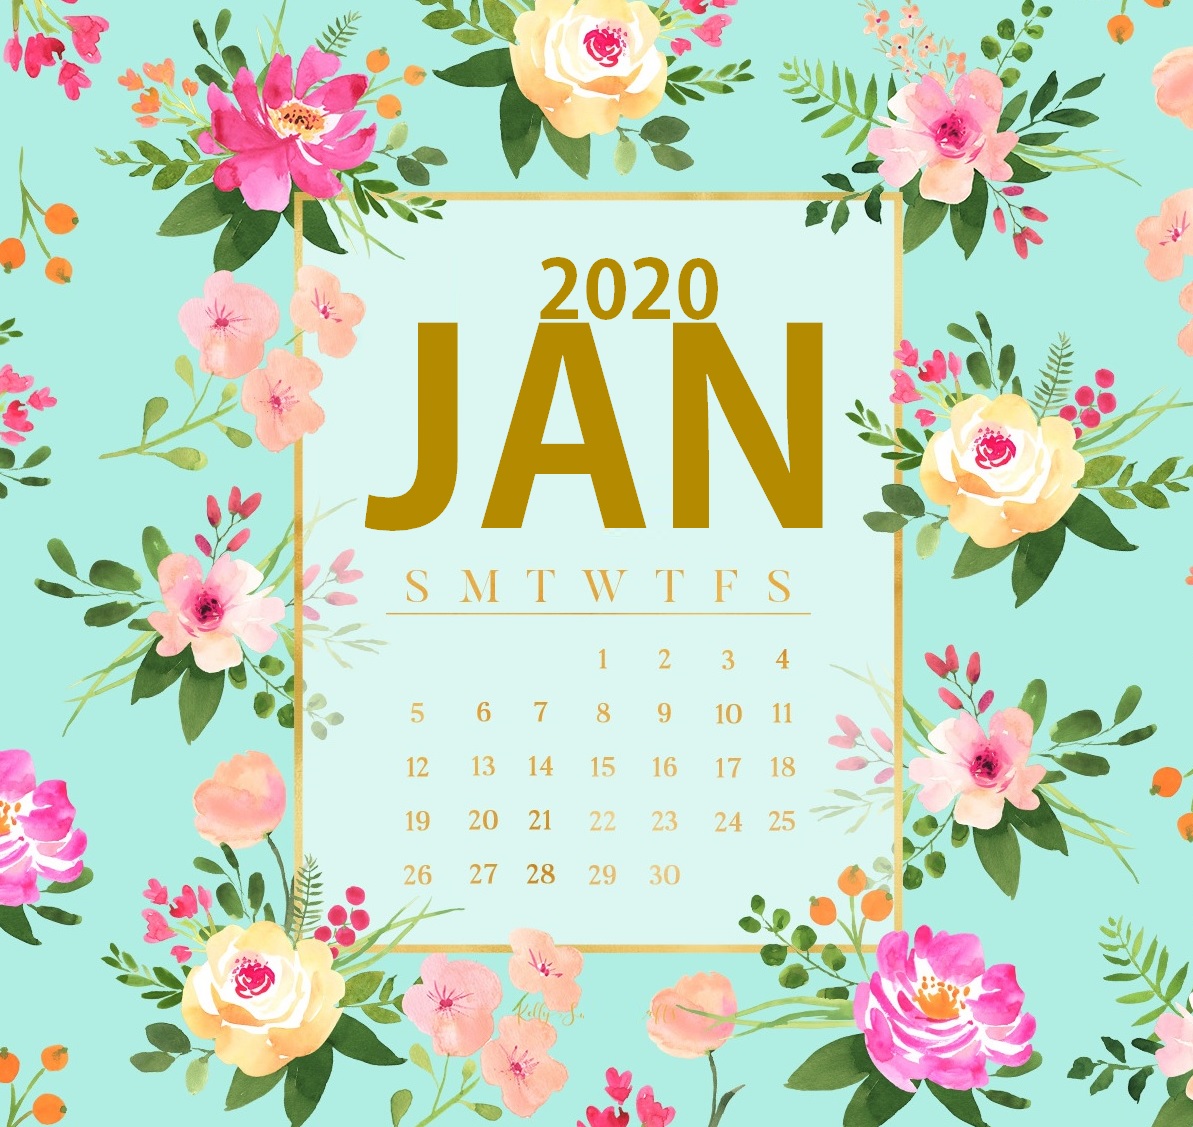 iPhone January Wallpaper Calendar